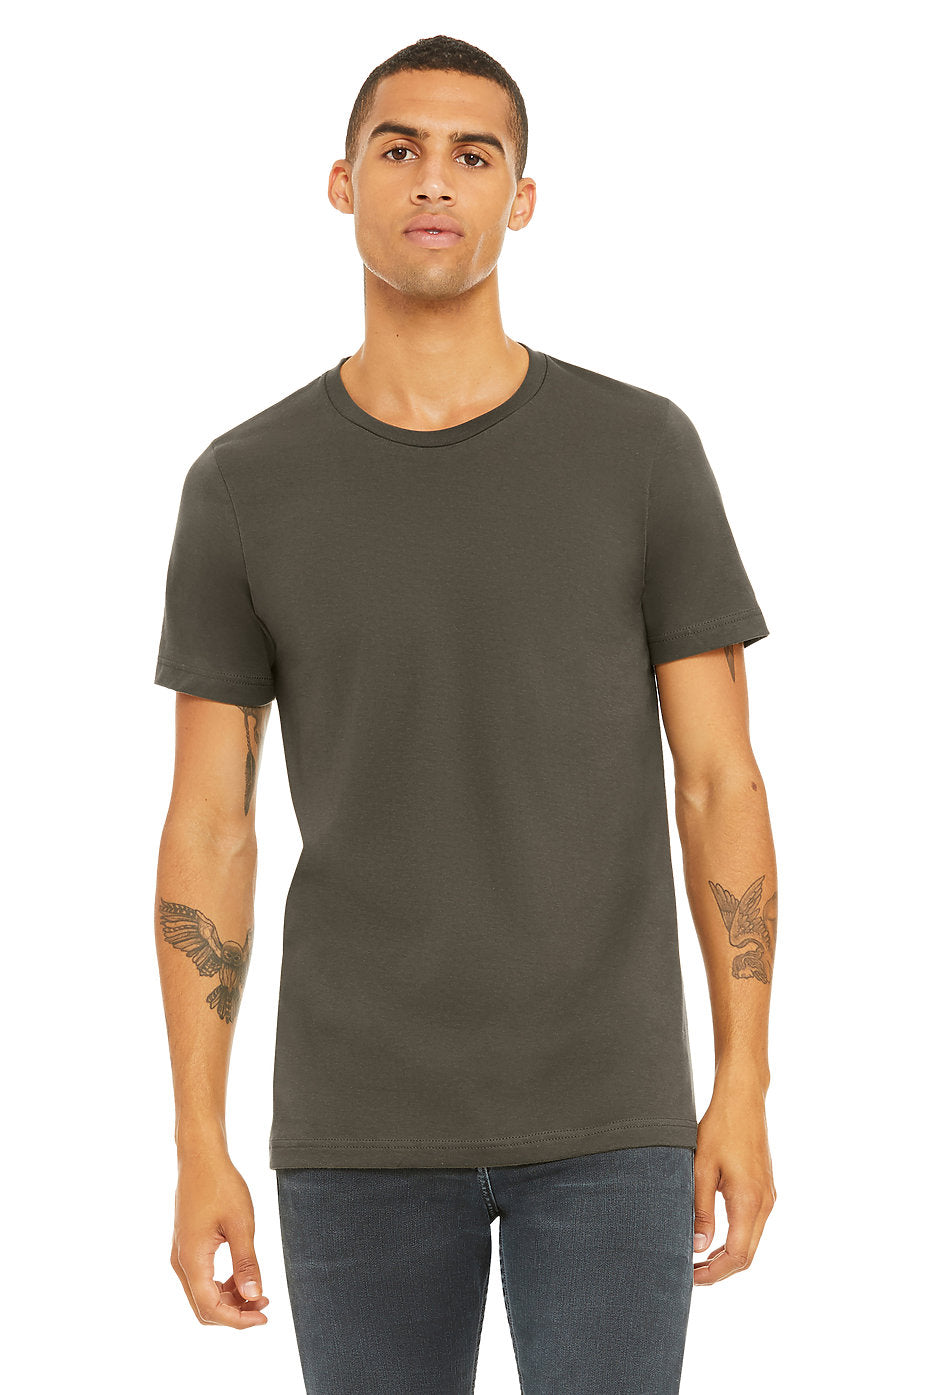 Bella + Canvas - Unisex Jersey Short-Sleeve t-shirt-Black-XS